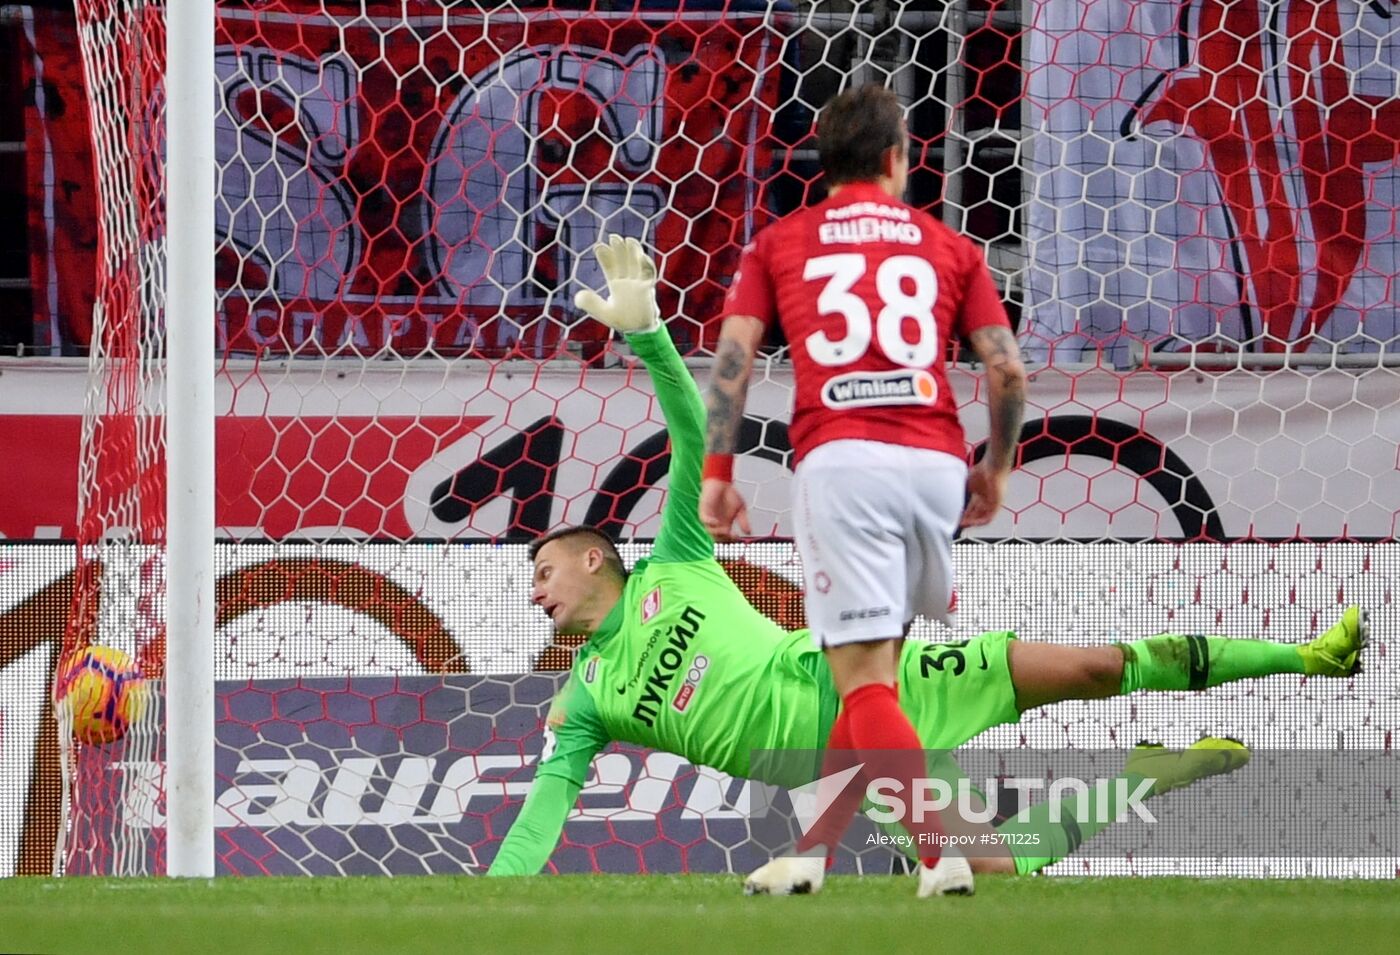 Russia Soccer Premier-League Spartak - Krylya Sovetov